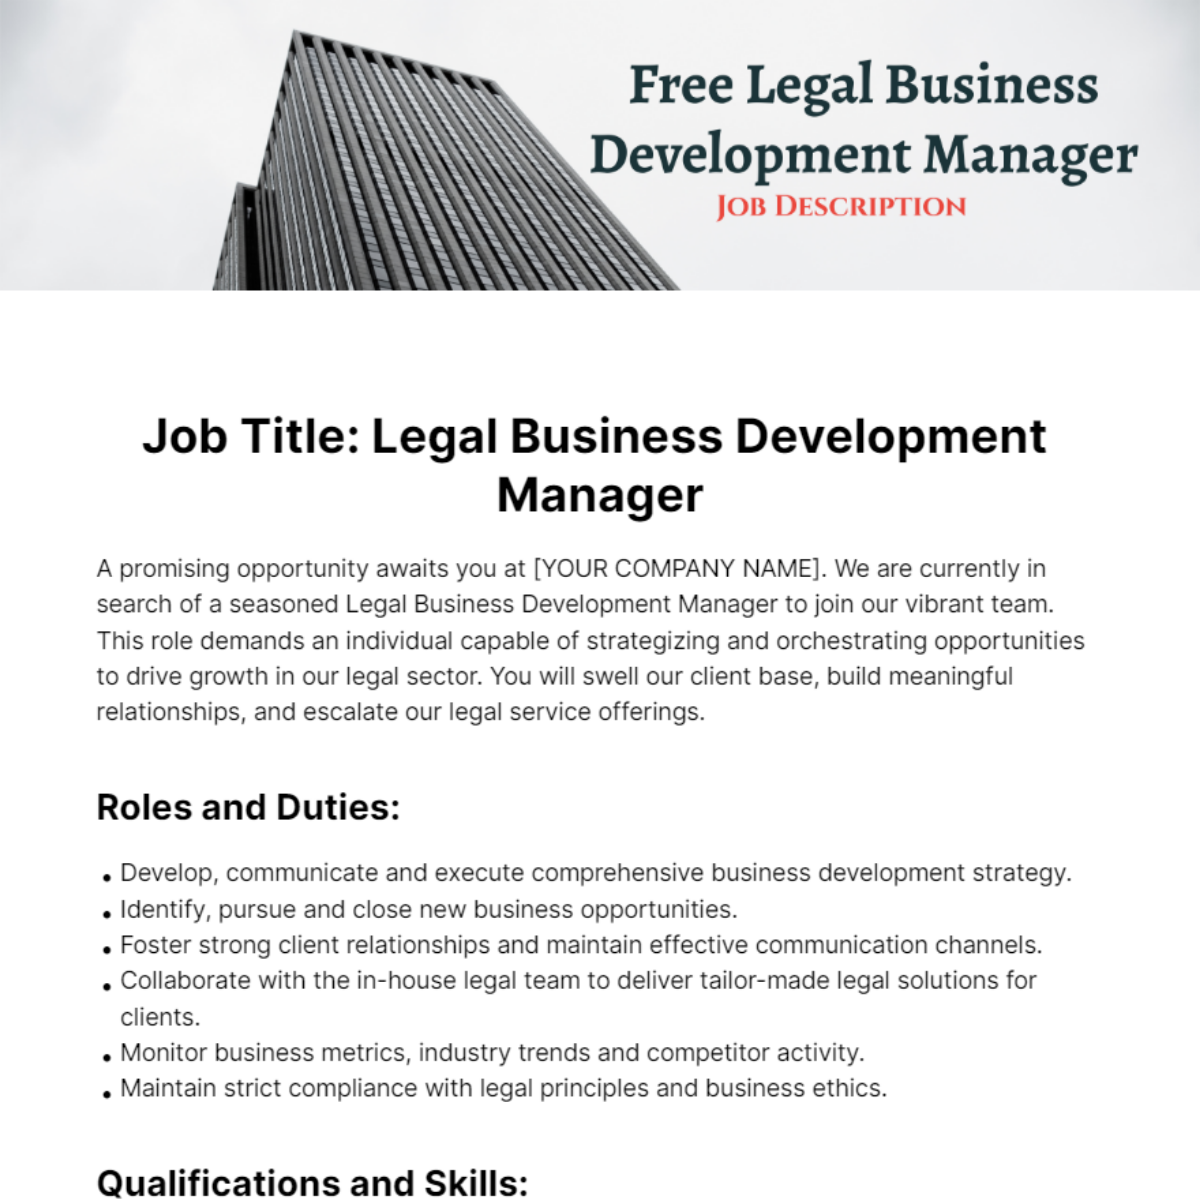 Free Legal Business Development Manager Job Description Template